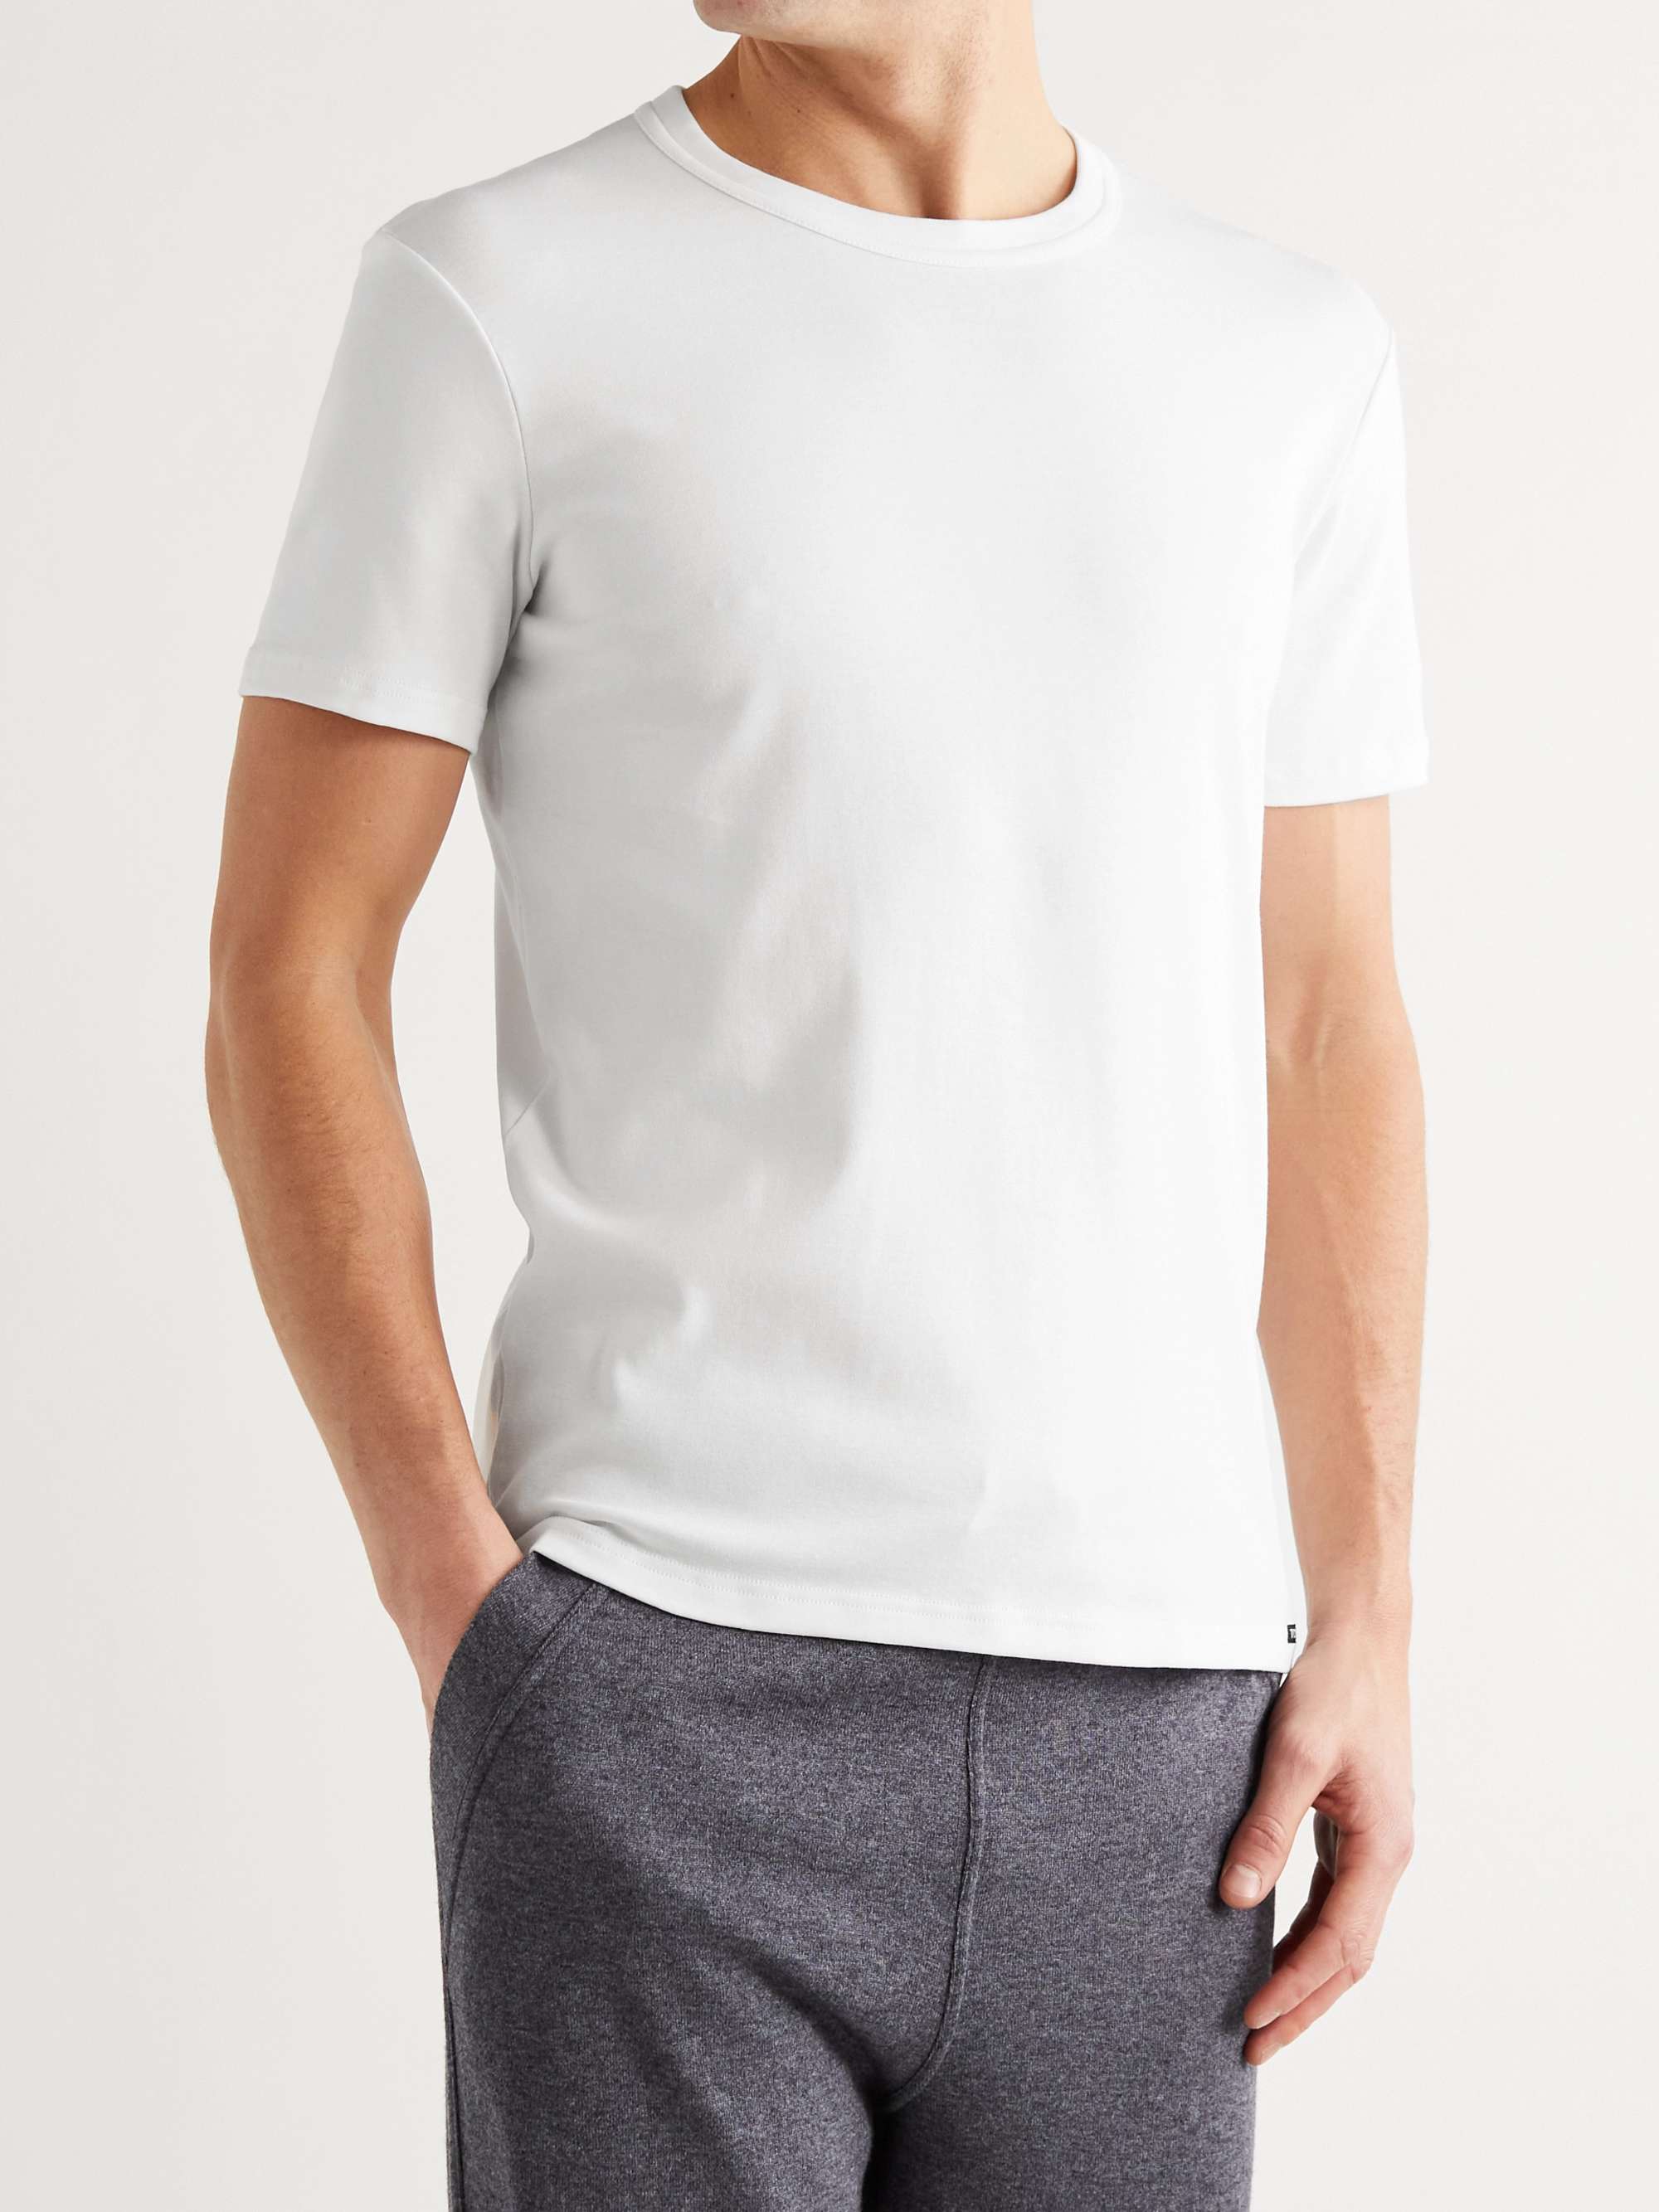 TOM FORD Slim-Fit Stretch-Cotton Jersey T-Shirt | MR PORTER